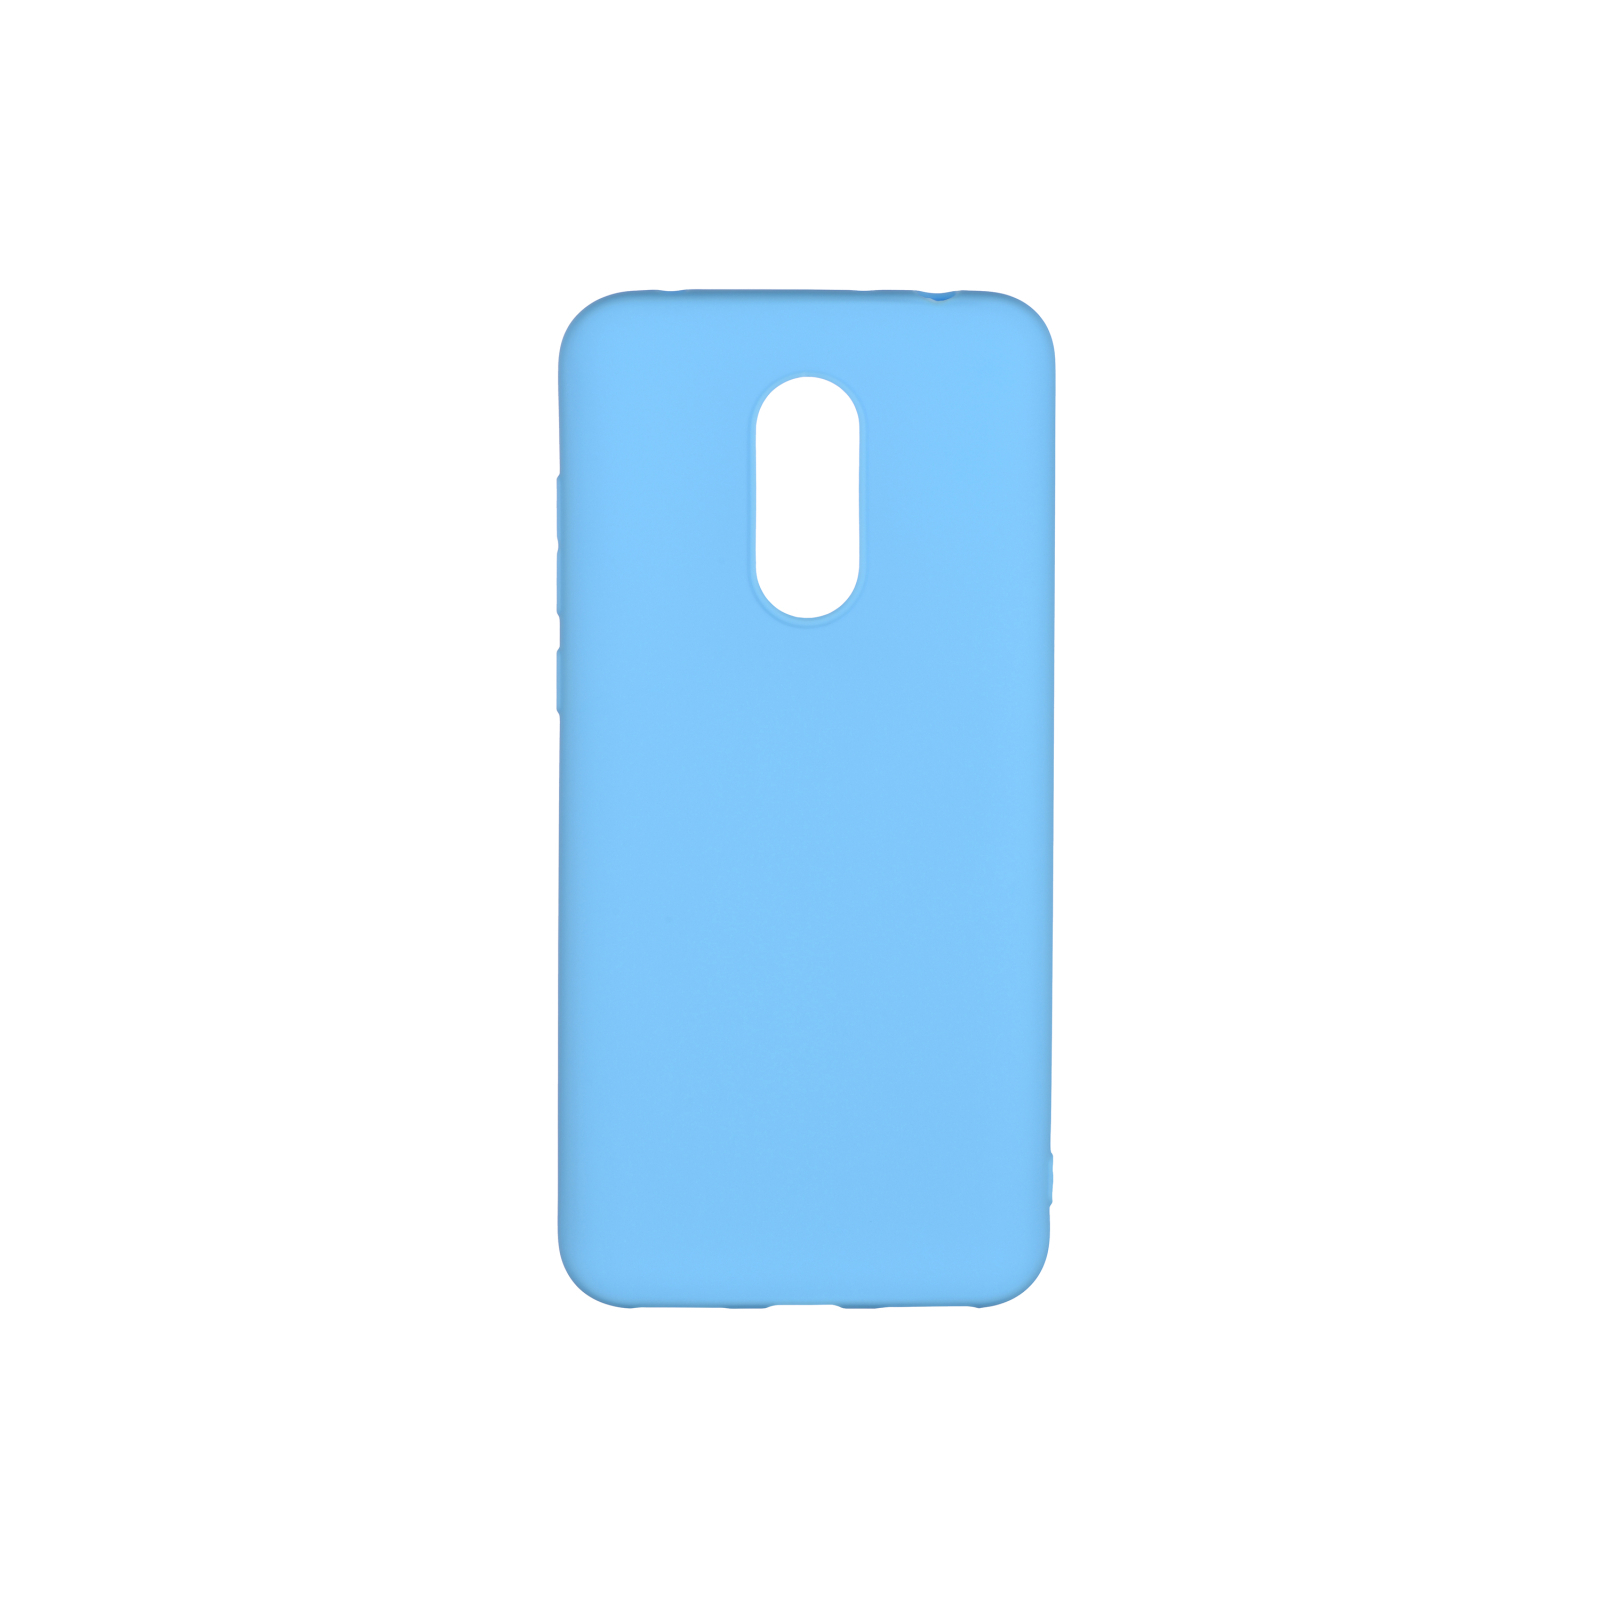 Чехол для мобильного телефона 2E Xiaomi Redmi 5 Plus, Soft touch, Blue (2E-MI-5P-NKST-BL)